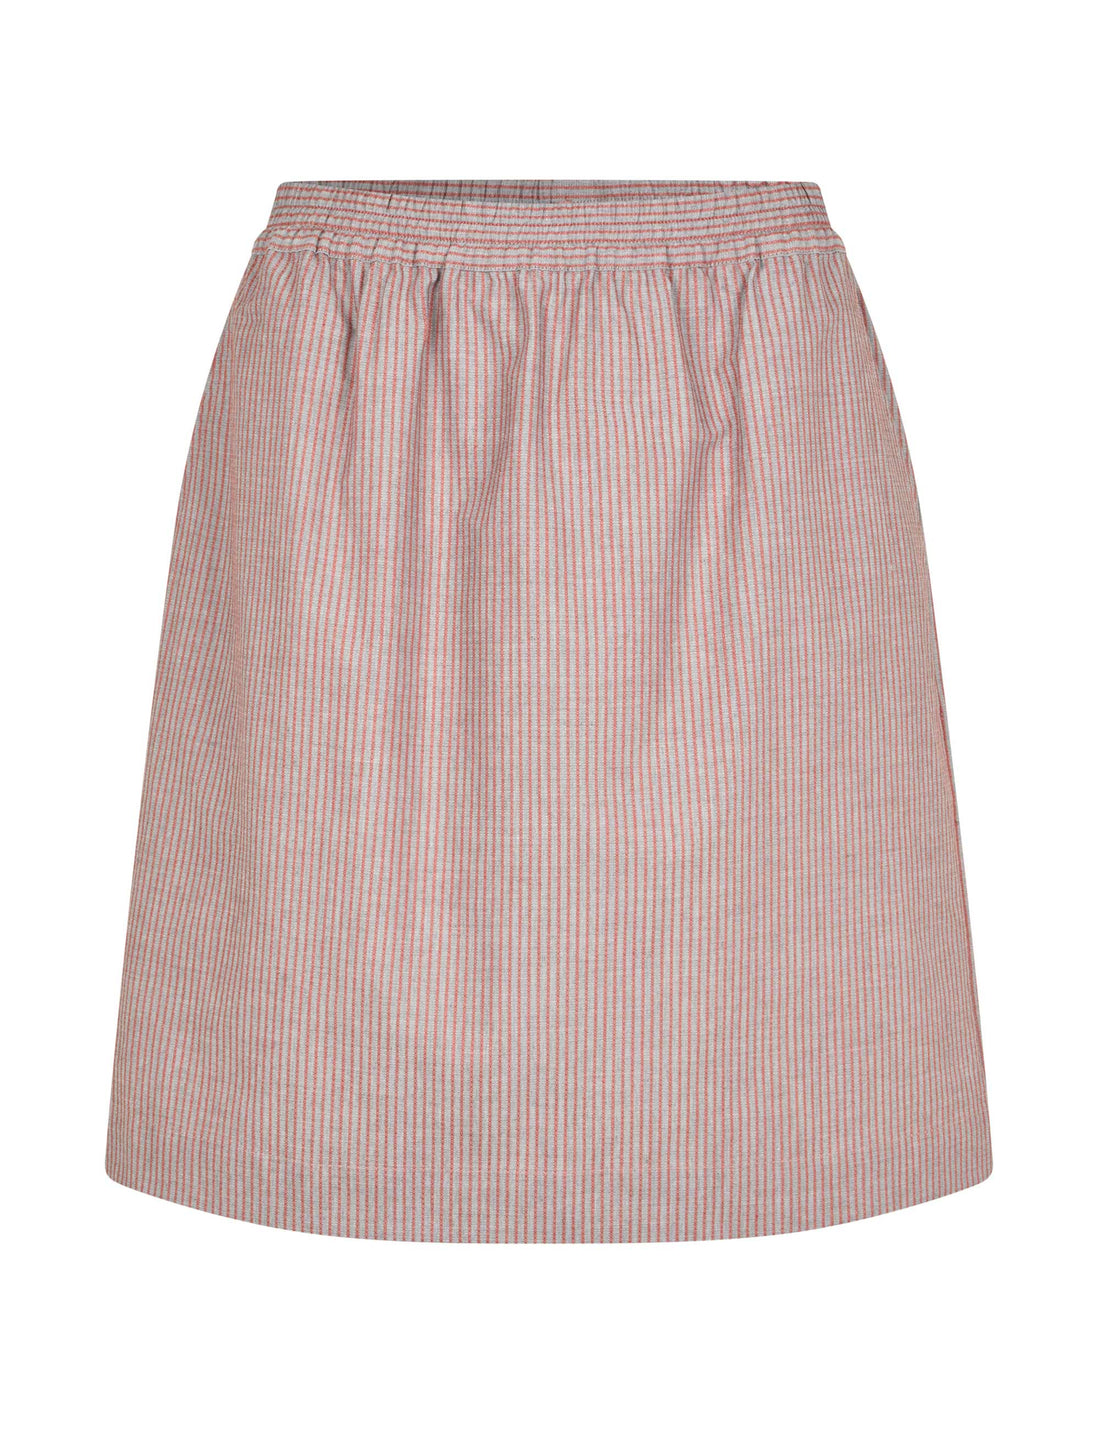 Kamille skirt grey/red stripe